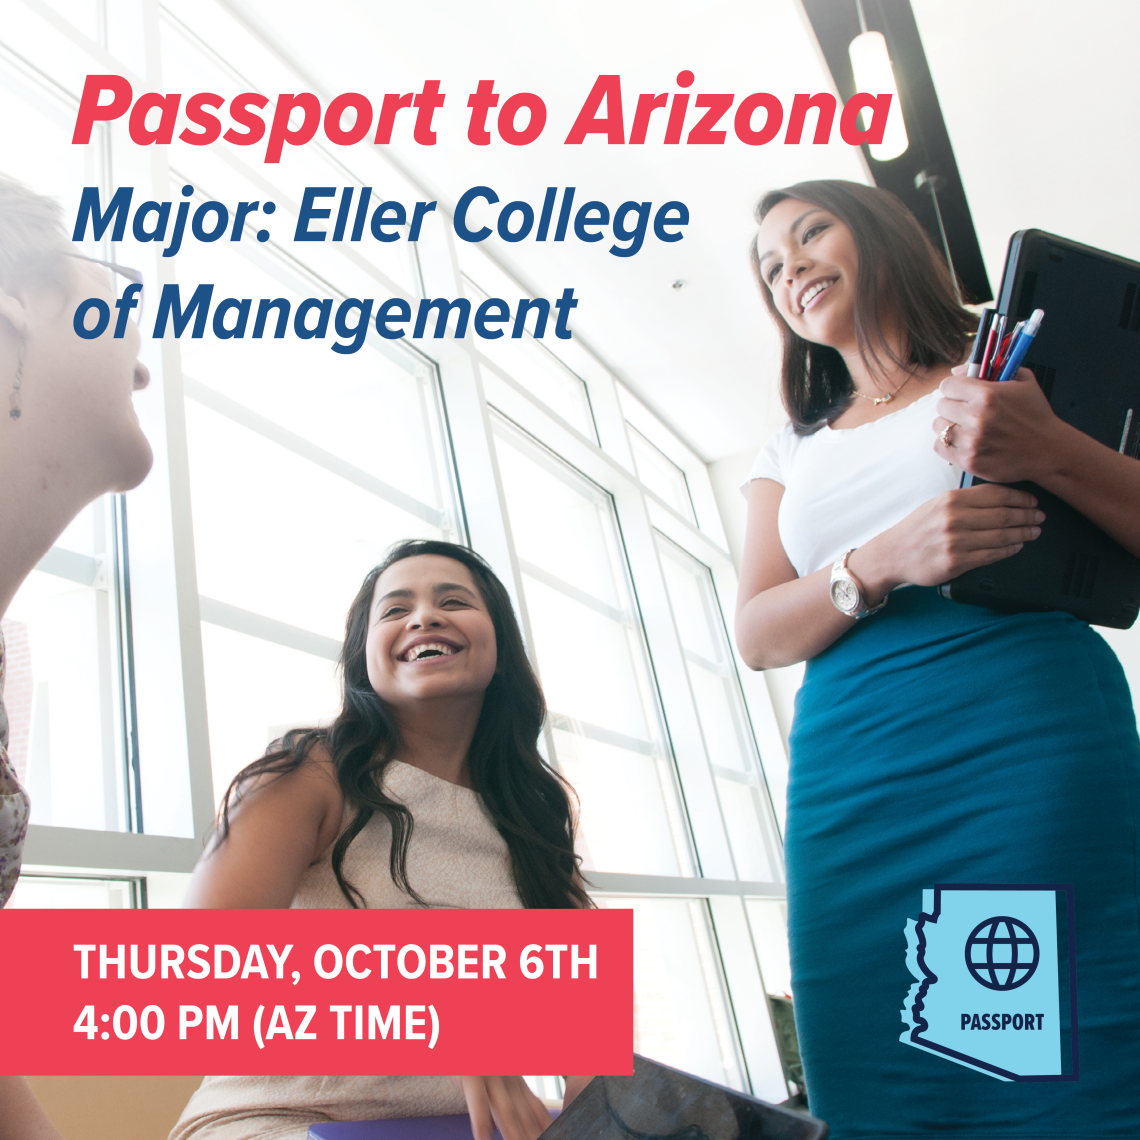 Passport to Arizona Major Eller College of Management Thu, Oct 6